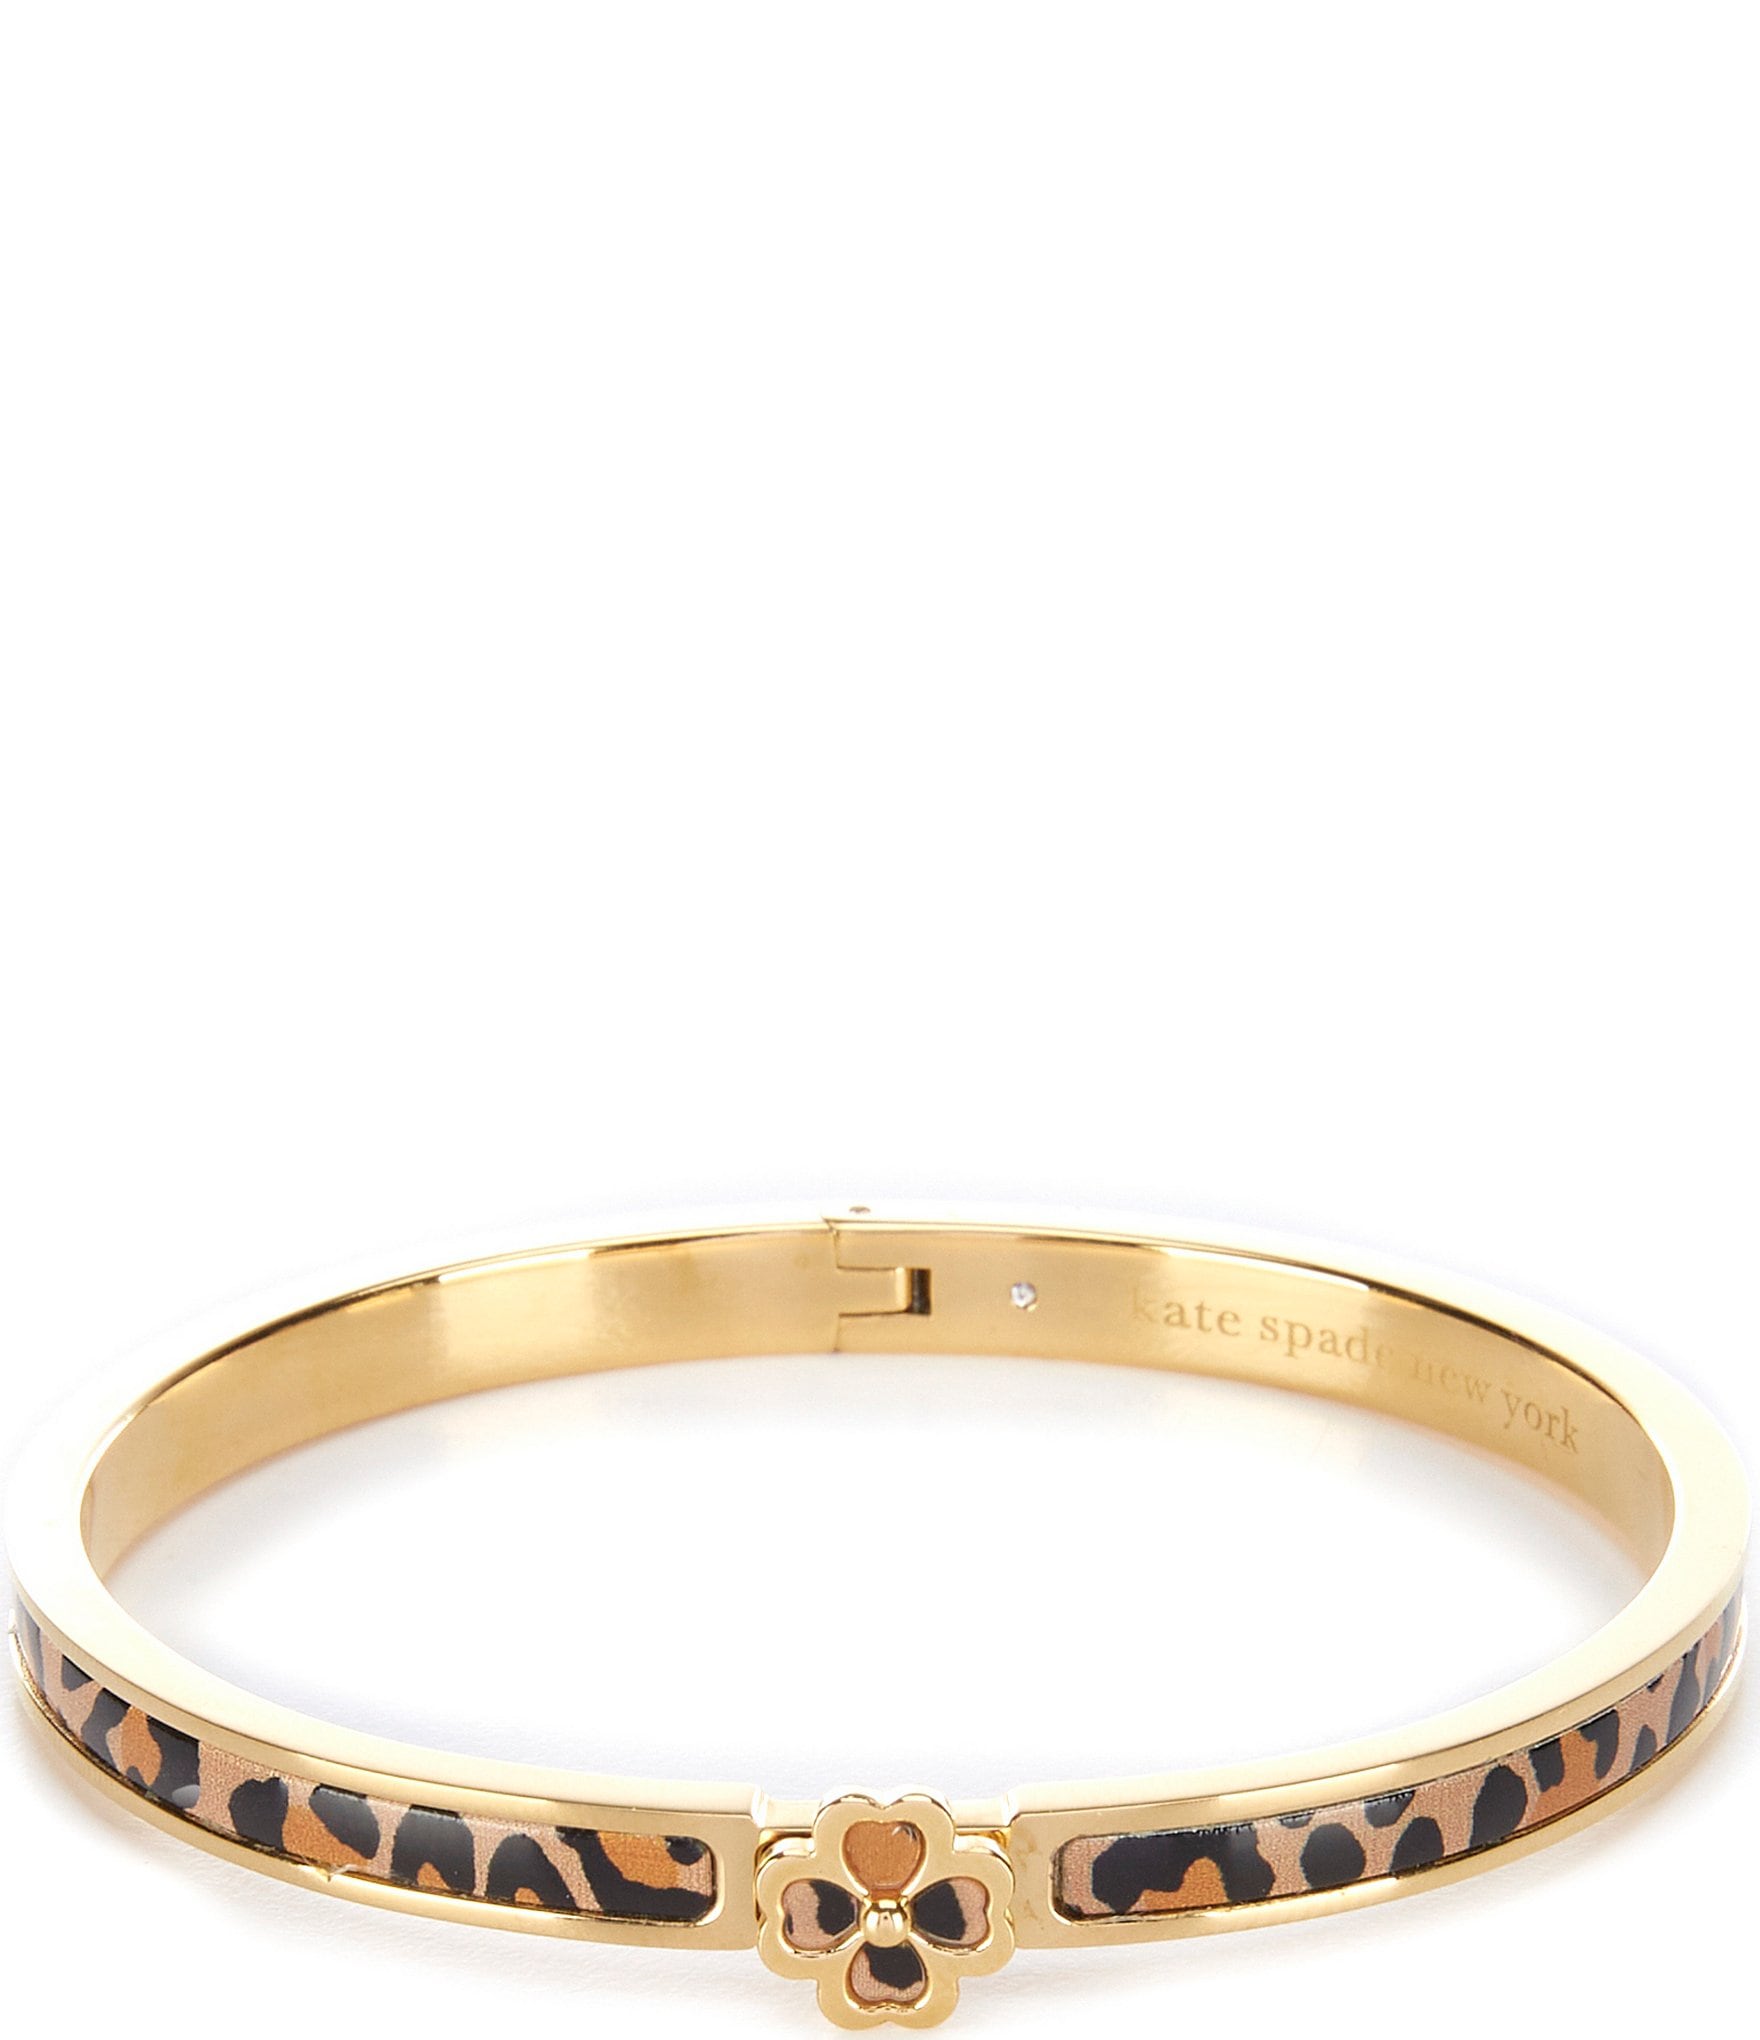 Kate Spade New York Idiom Bangles Heart Of Gold Bracelet - Gold | very.co.uk